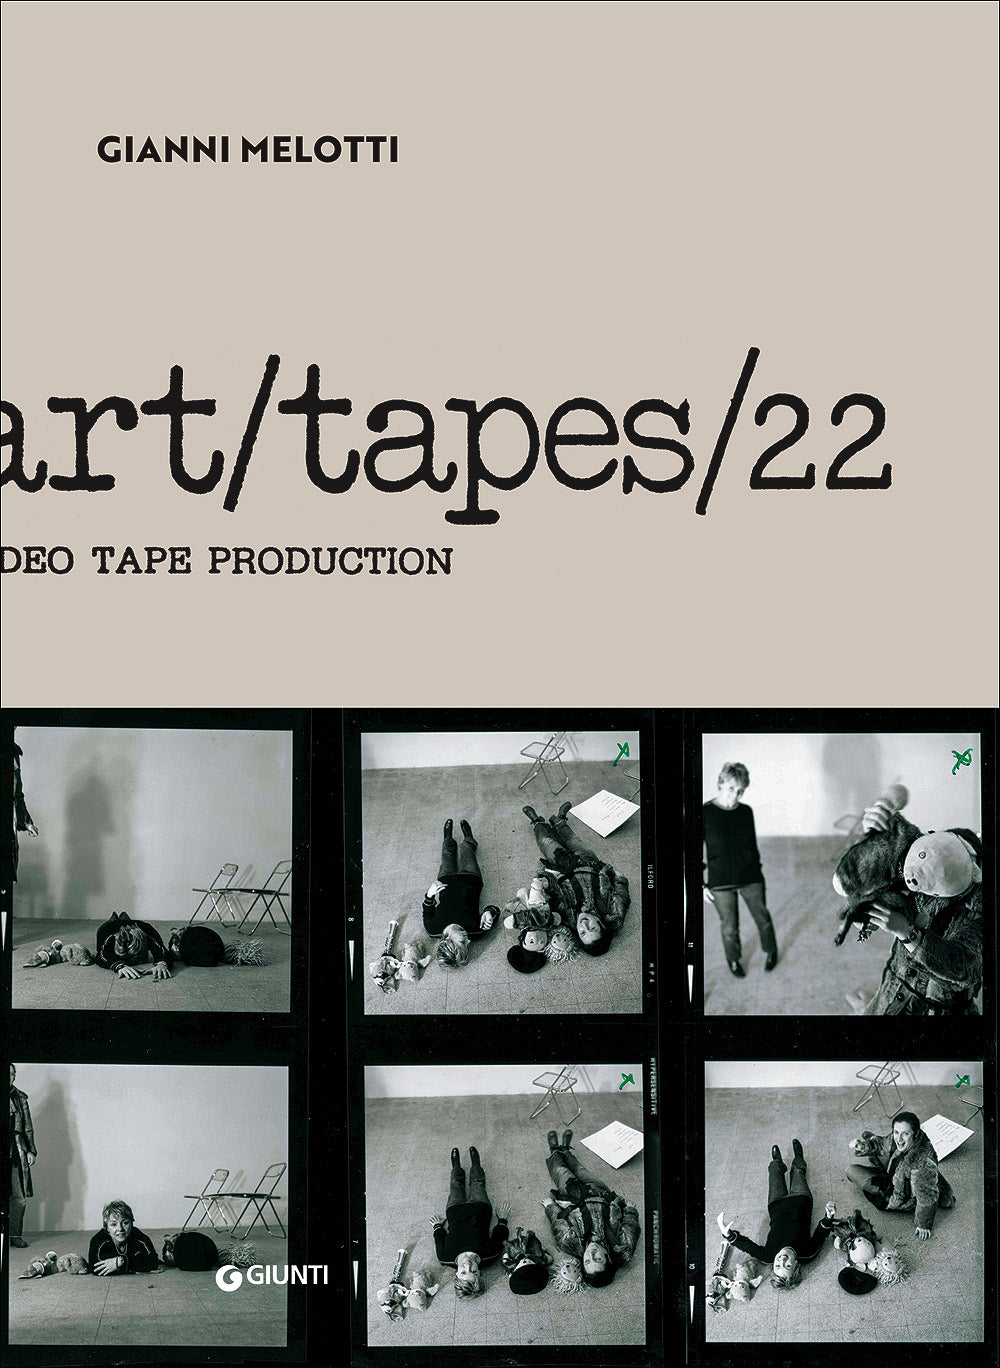 Gianni Melotti. Art/tapes/22. Video tape production